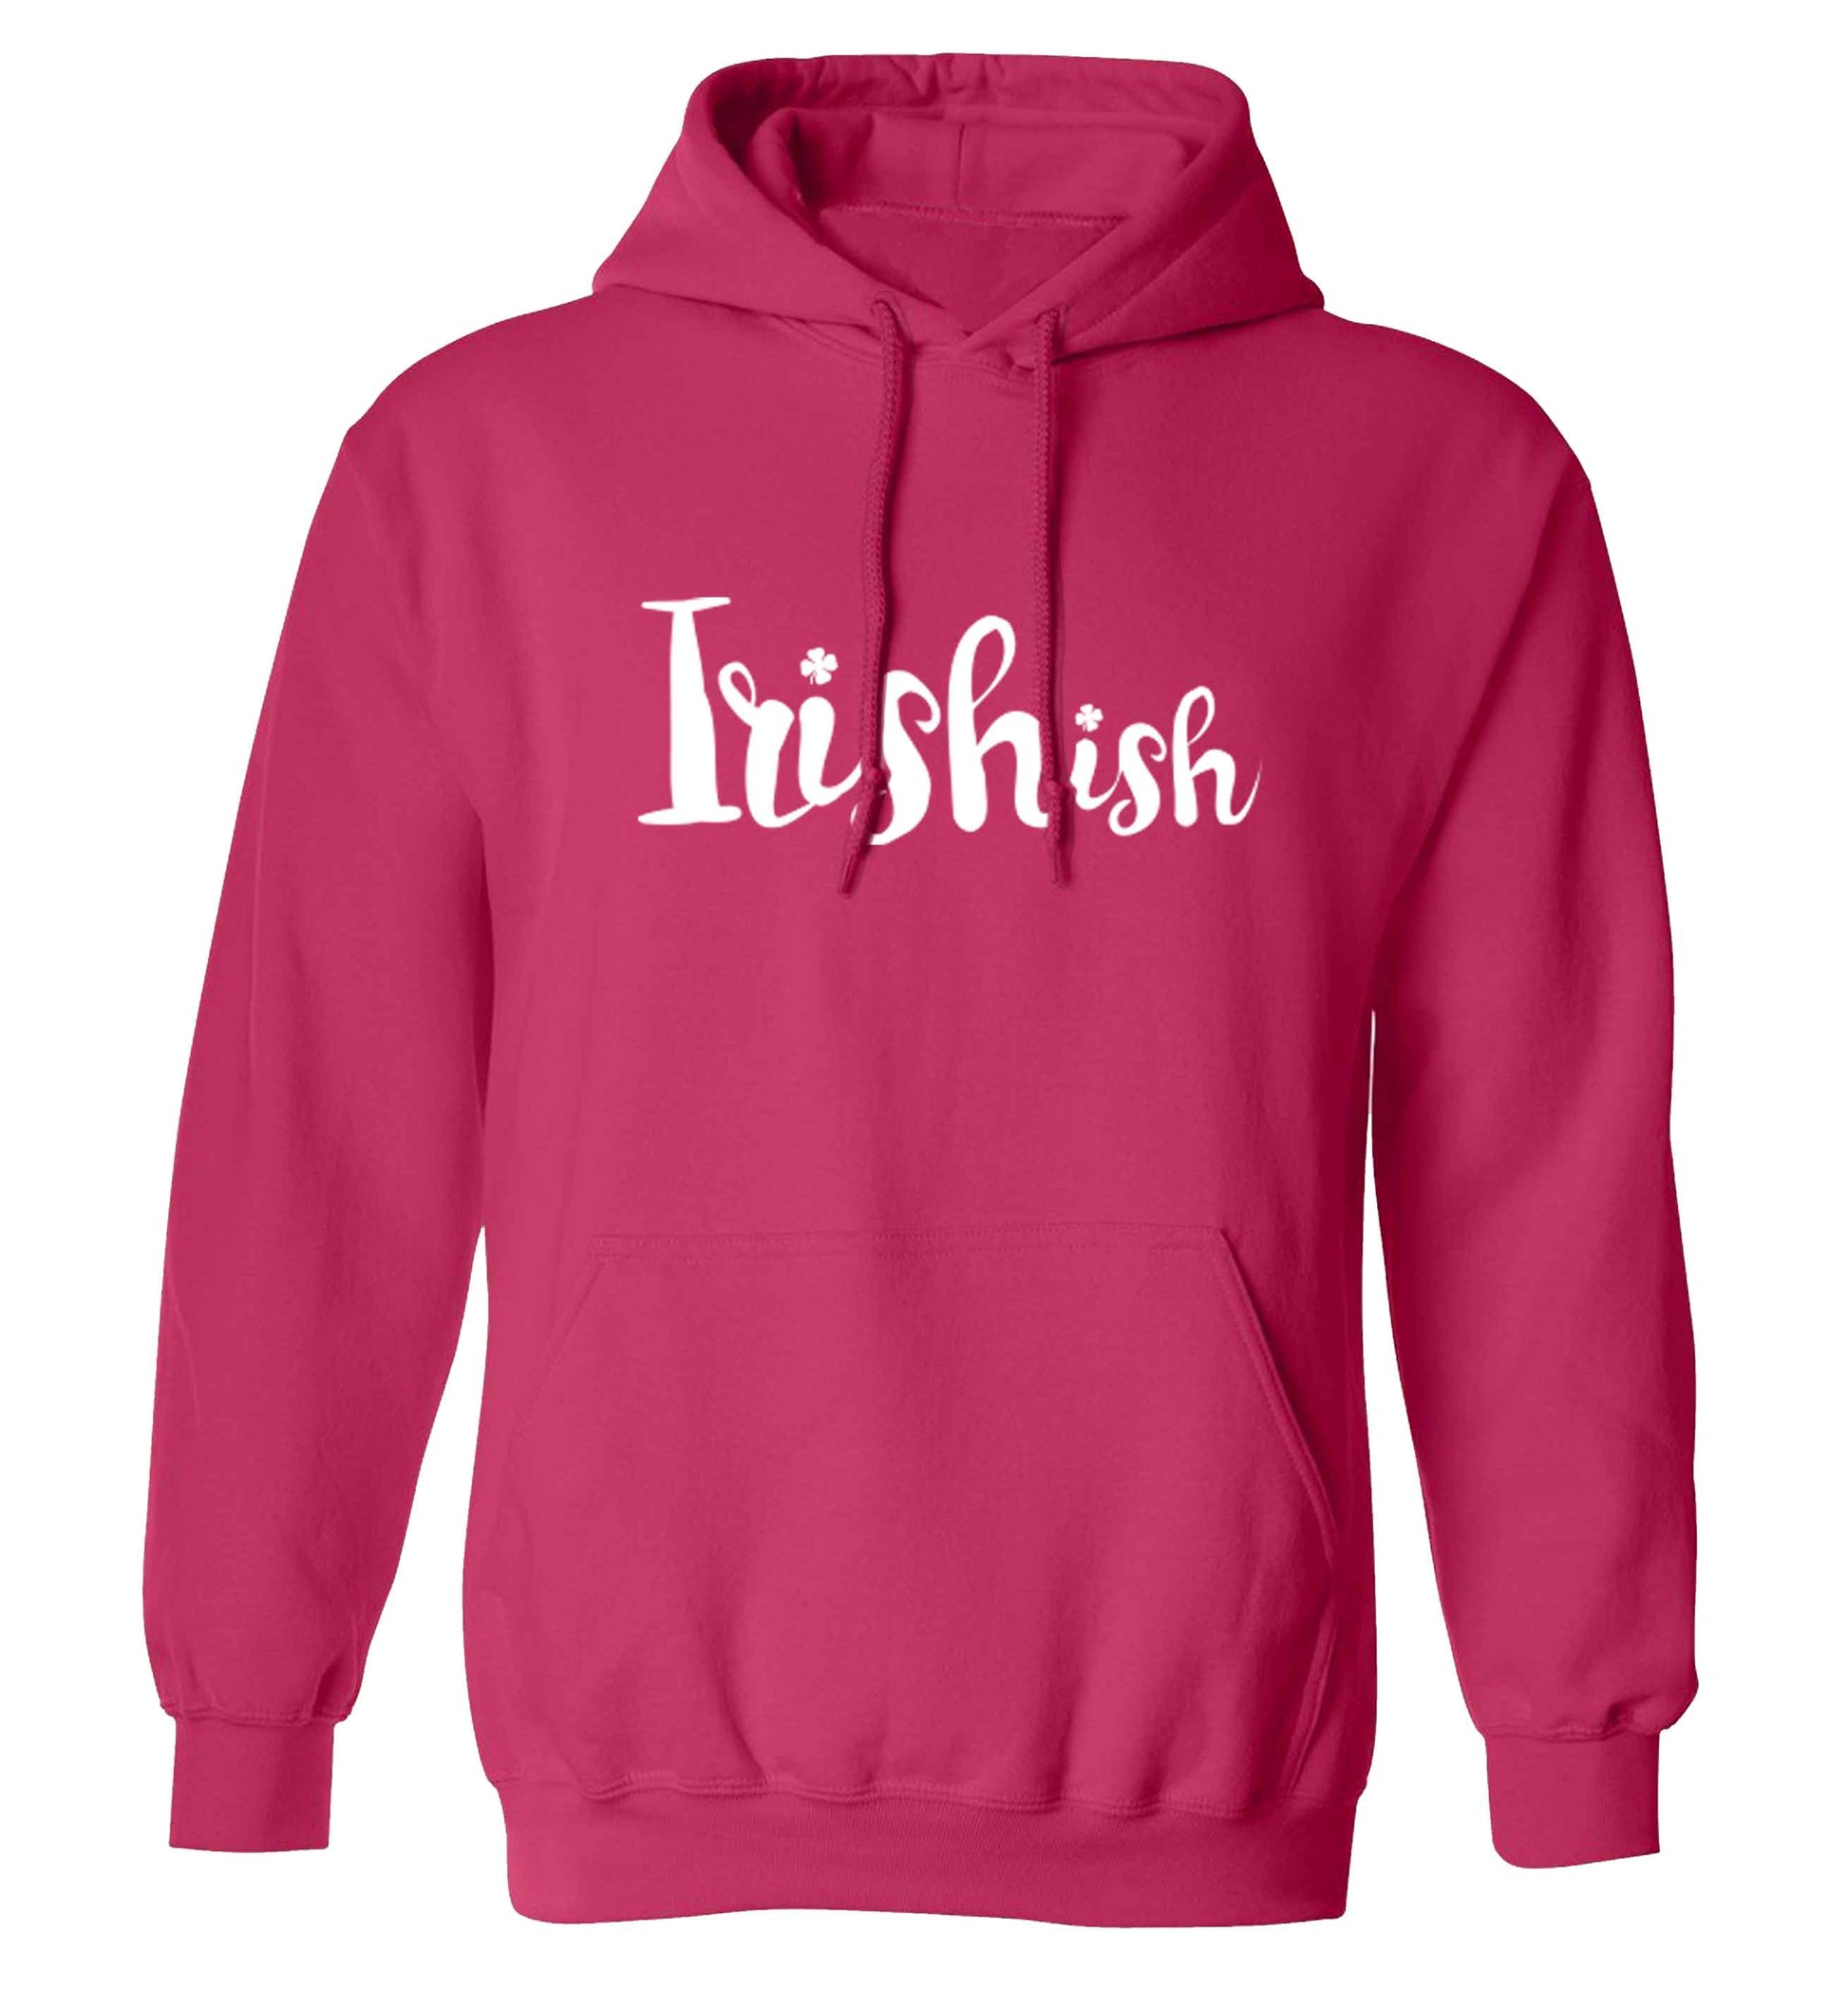 Irishish adults unisex pink hoodie 2XL